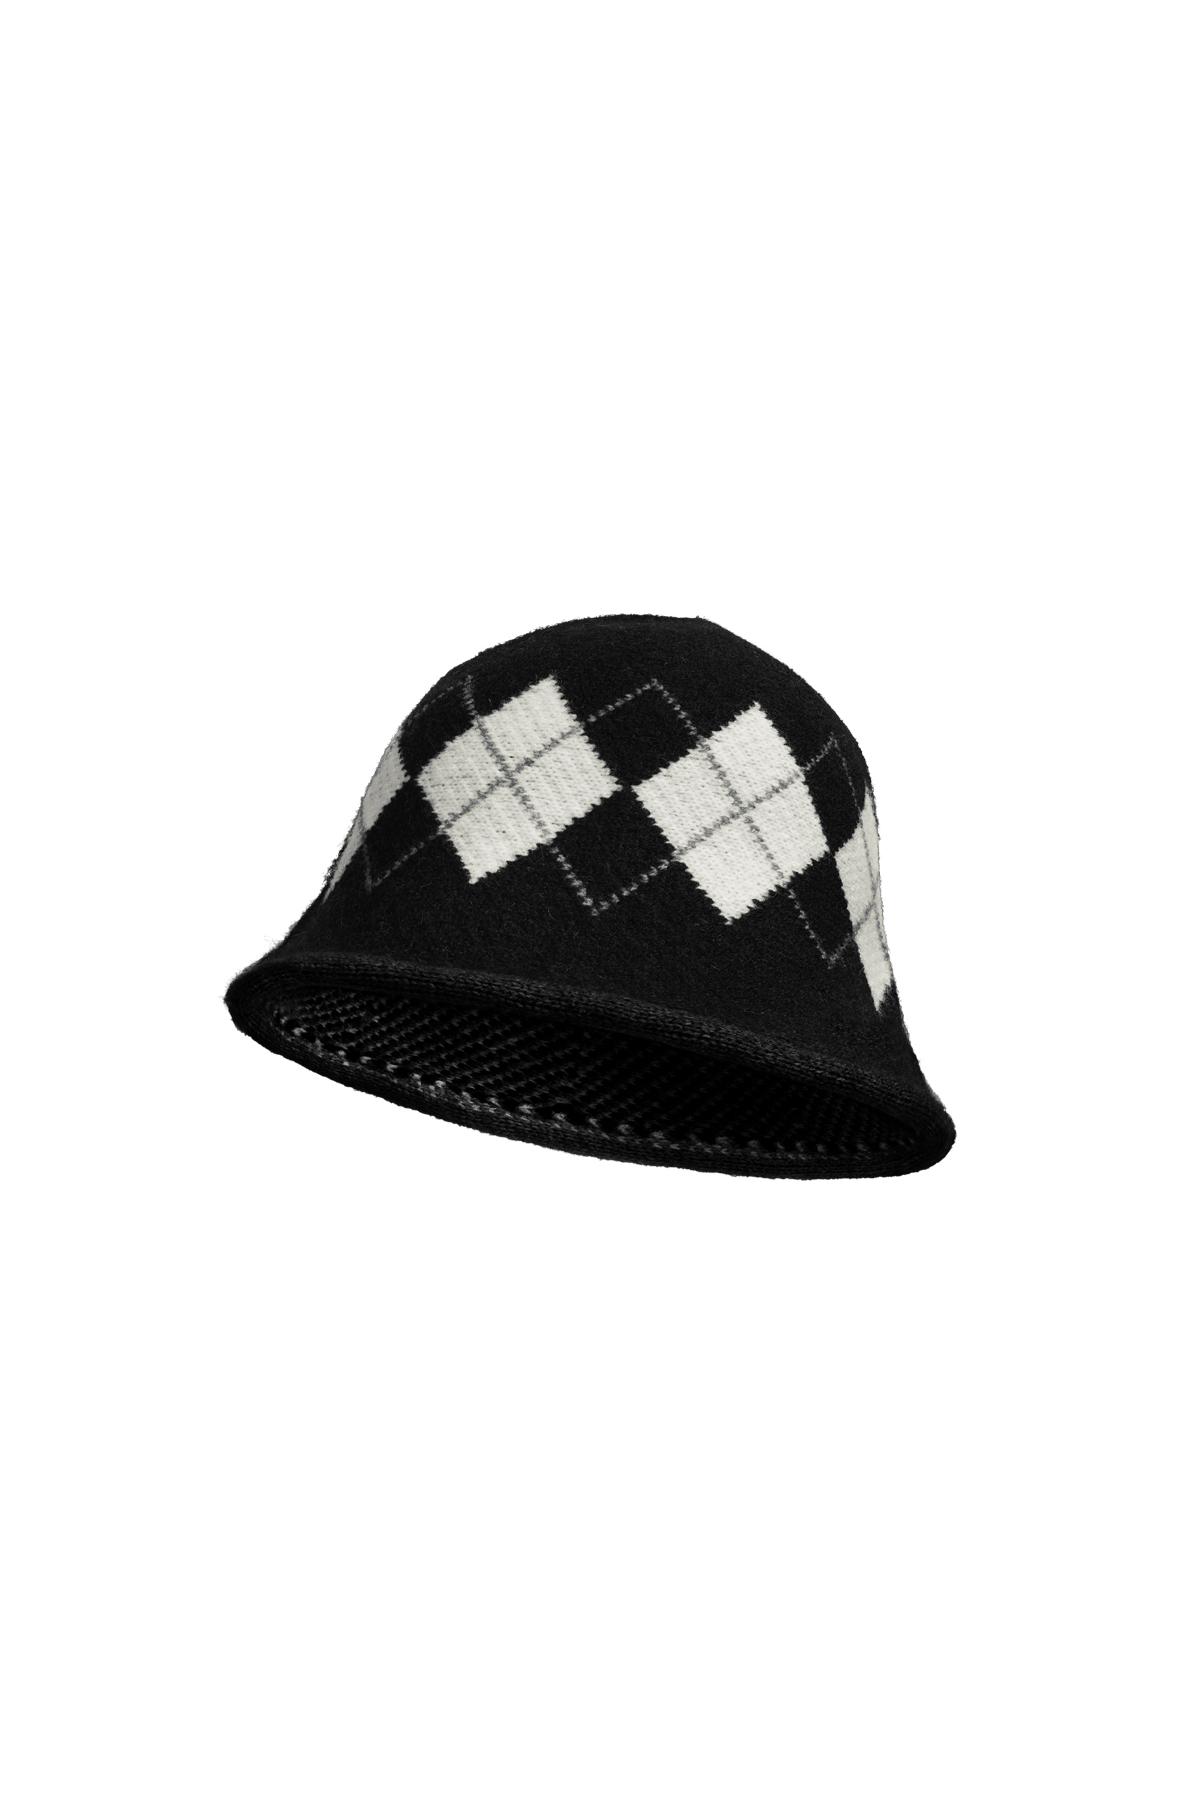 Kova şapka kareli Black & White Acrylic h5 